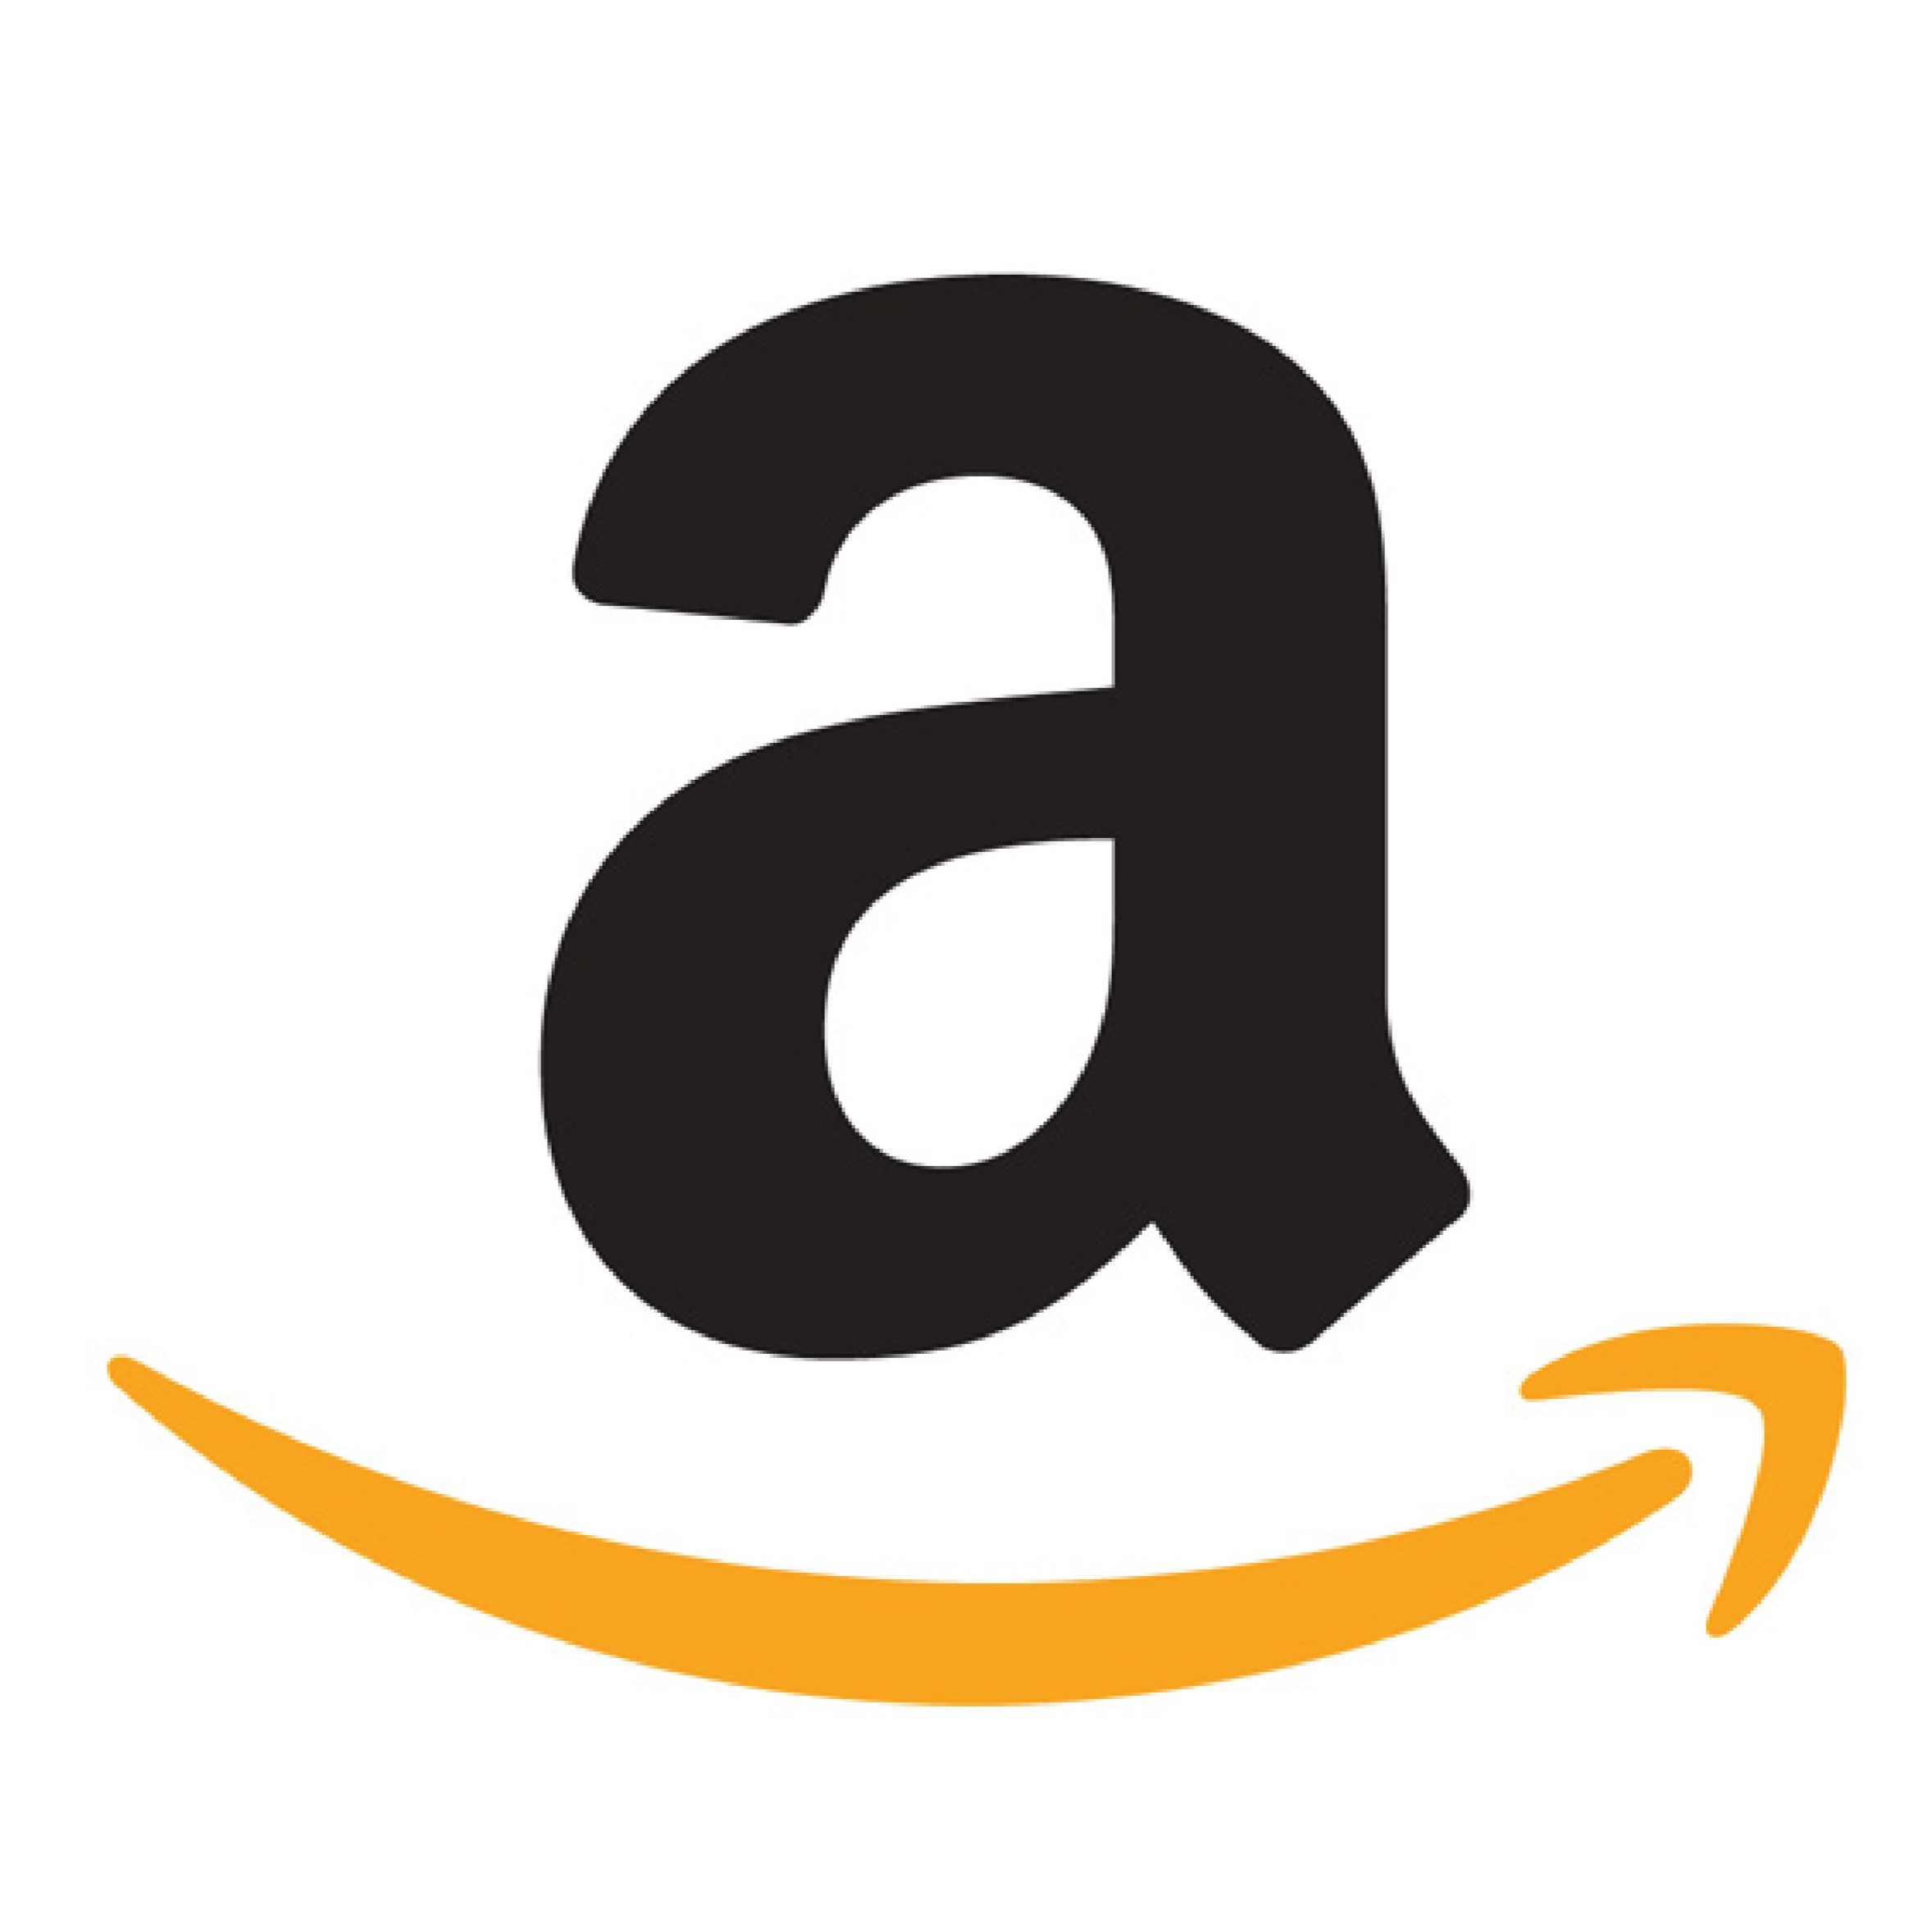 Amazon Product Name and Price Scraper